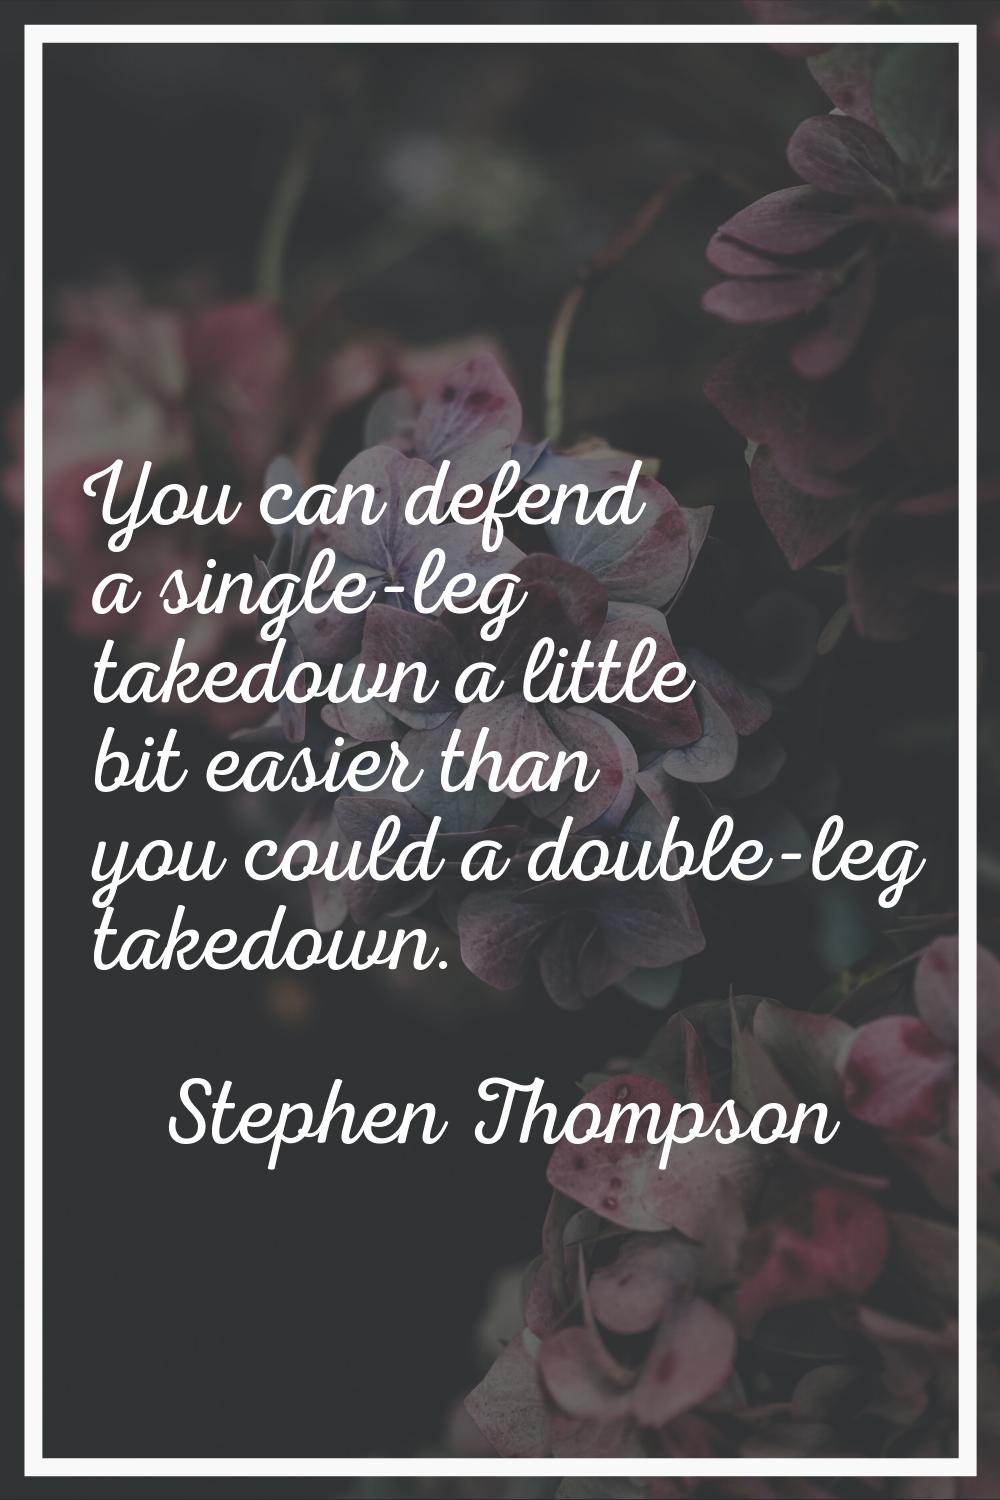 You can defend a single-leg takedown a little bit easier than you could a double-leg takedown.